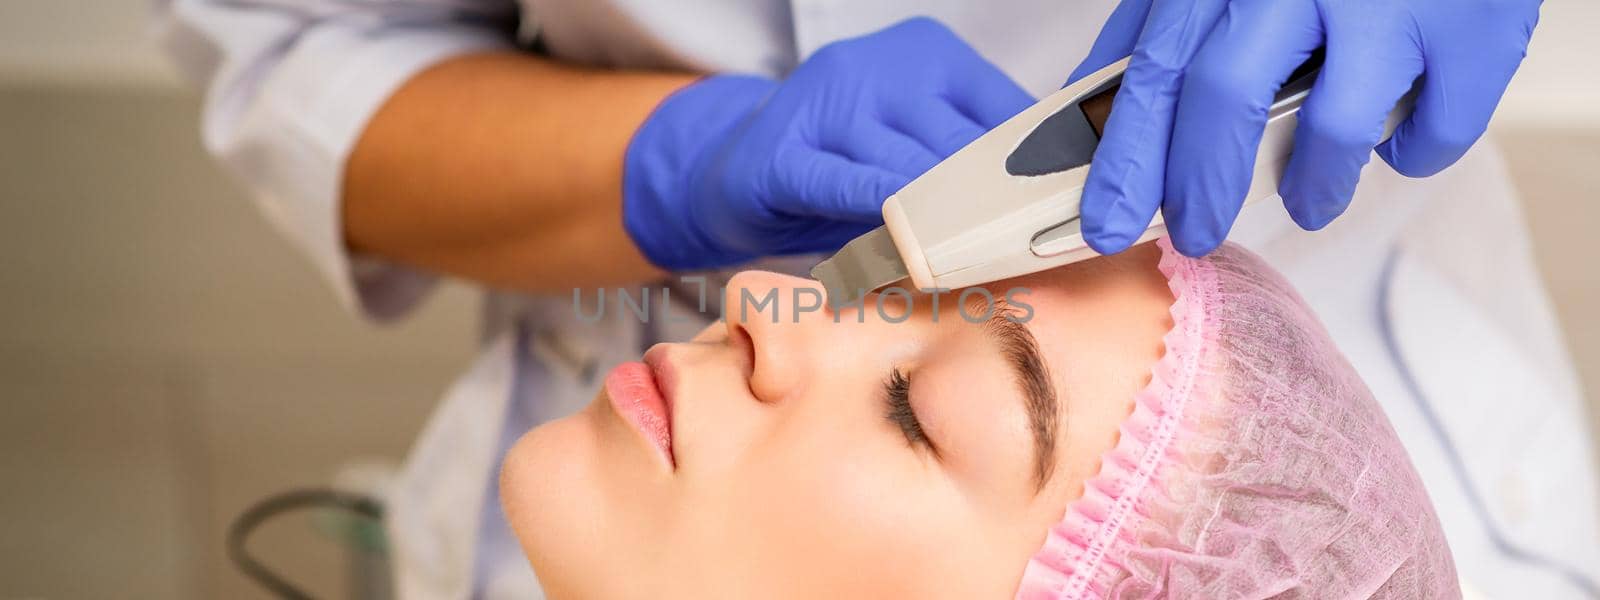 Young caucasian woman receiving facial skin cleaning by ultrasonic cosmetology face equipment in a medical salon. by okskukuruza